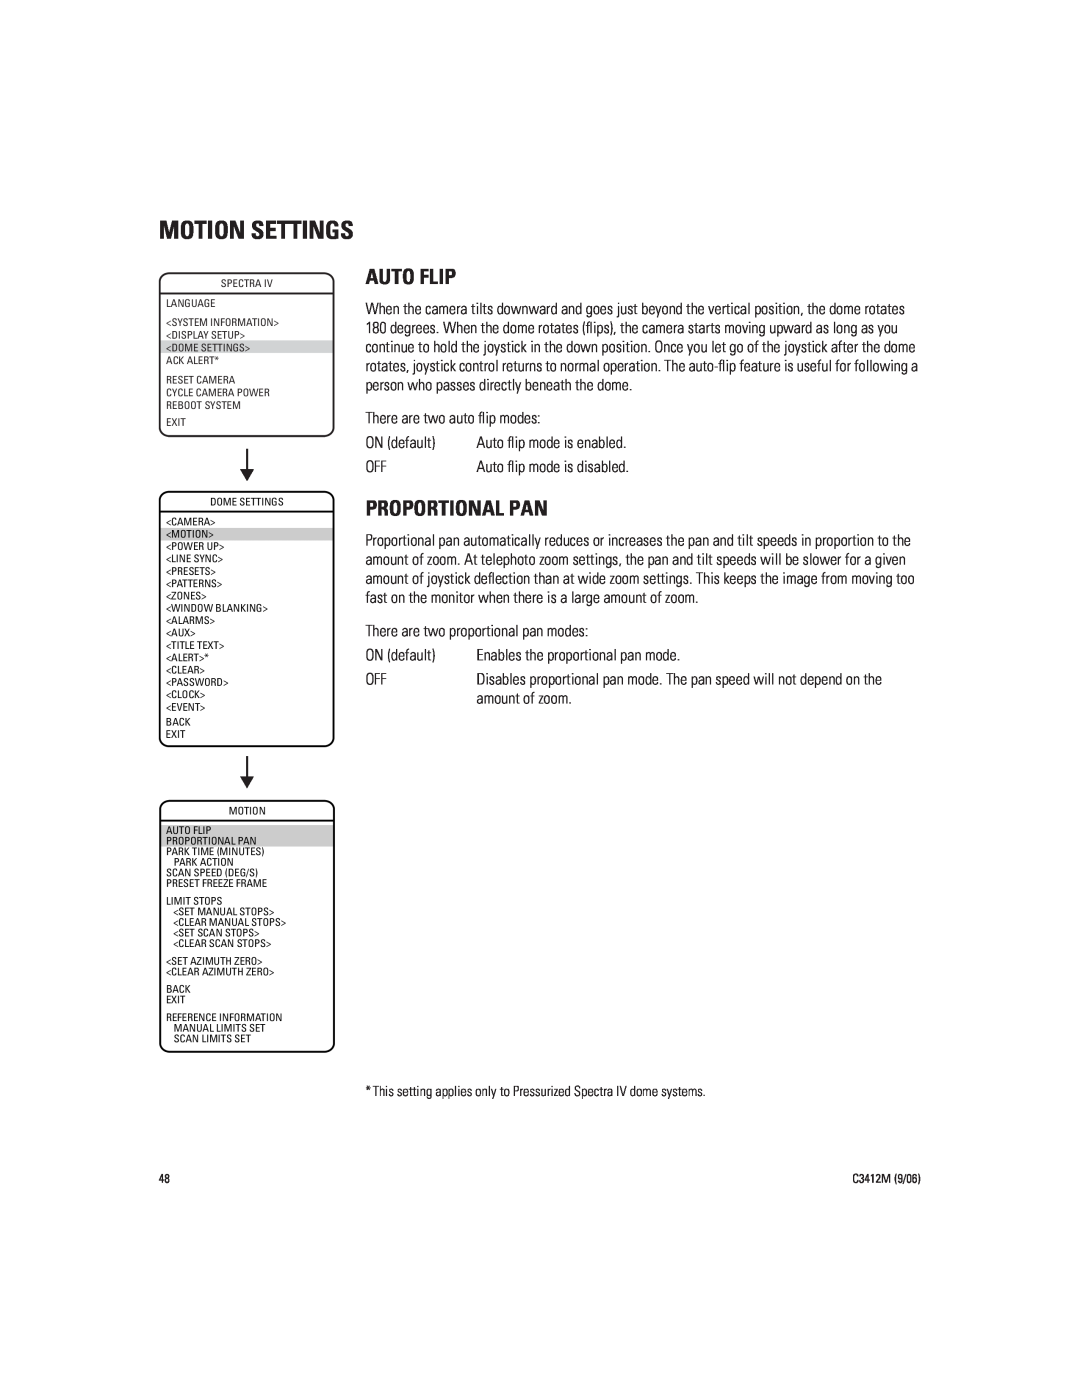 Pelco IV SE manual Motion Settings, Auto Flip, Proportional Pan 